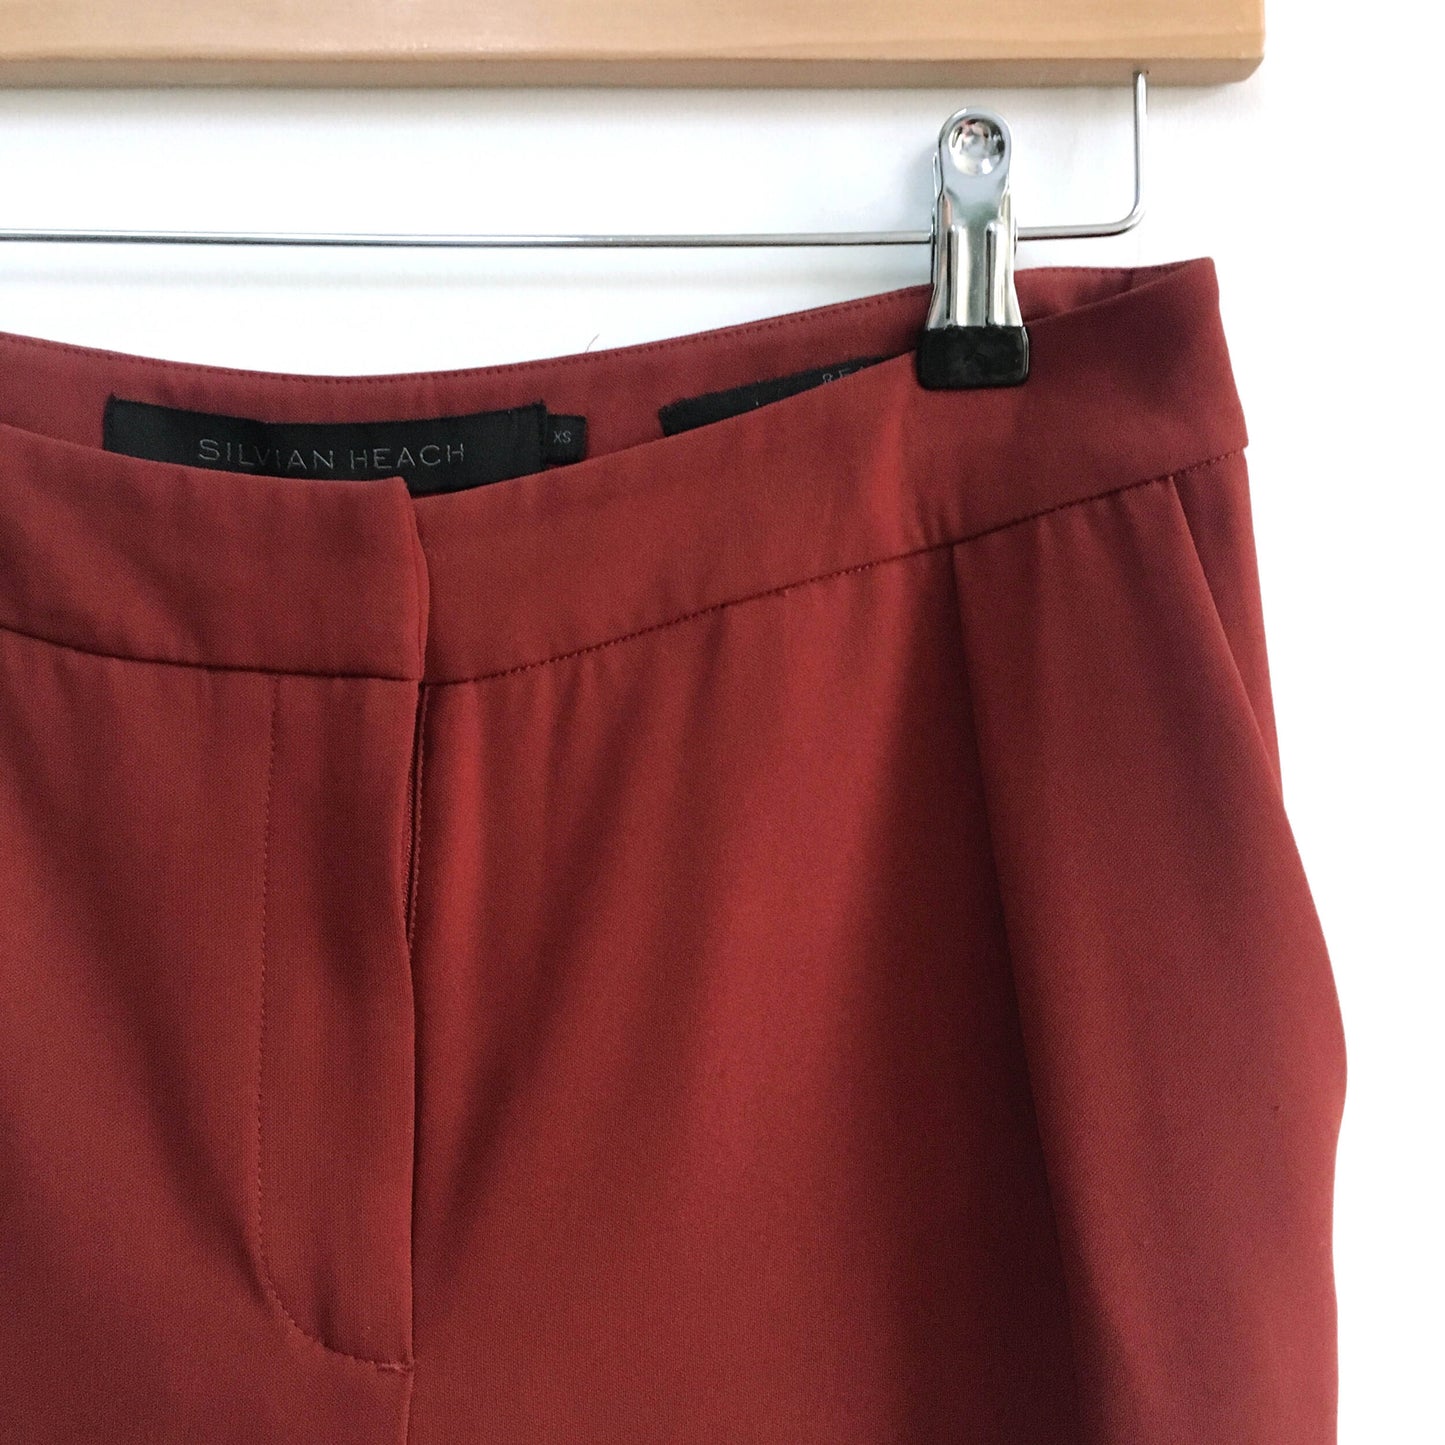 Silvian Heach Cropped Trouser - size xs